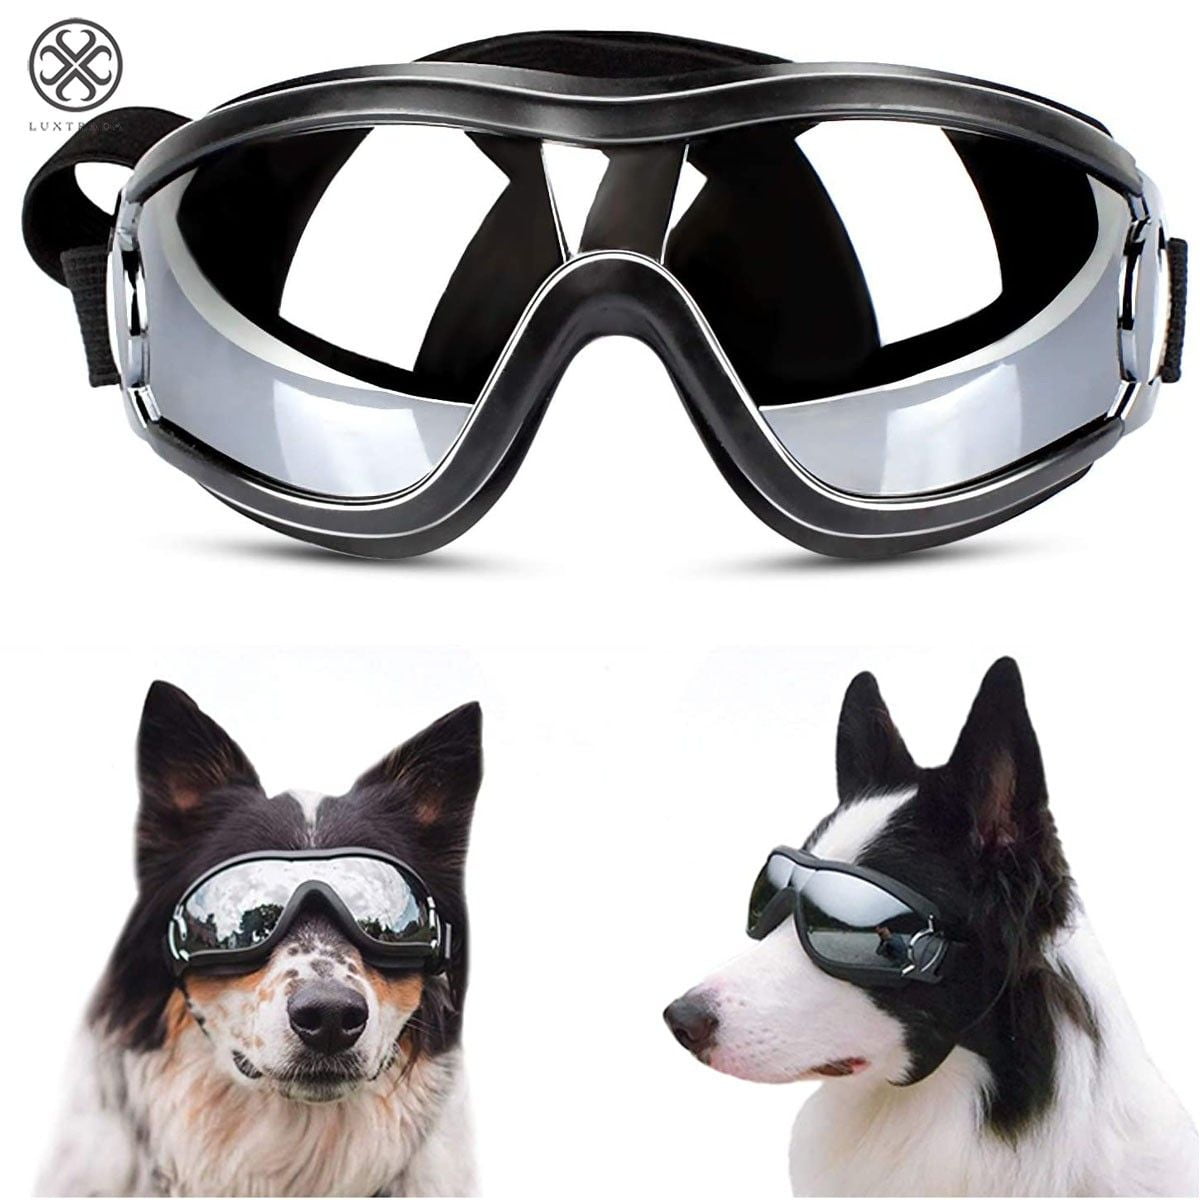 WESTLINK Dog Sunglasses Eye Wear UV Protection Goggles Pet Fashion Extra Small 